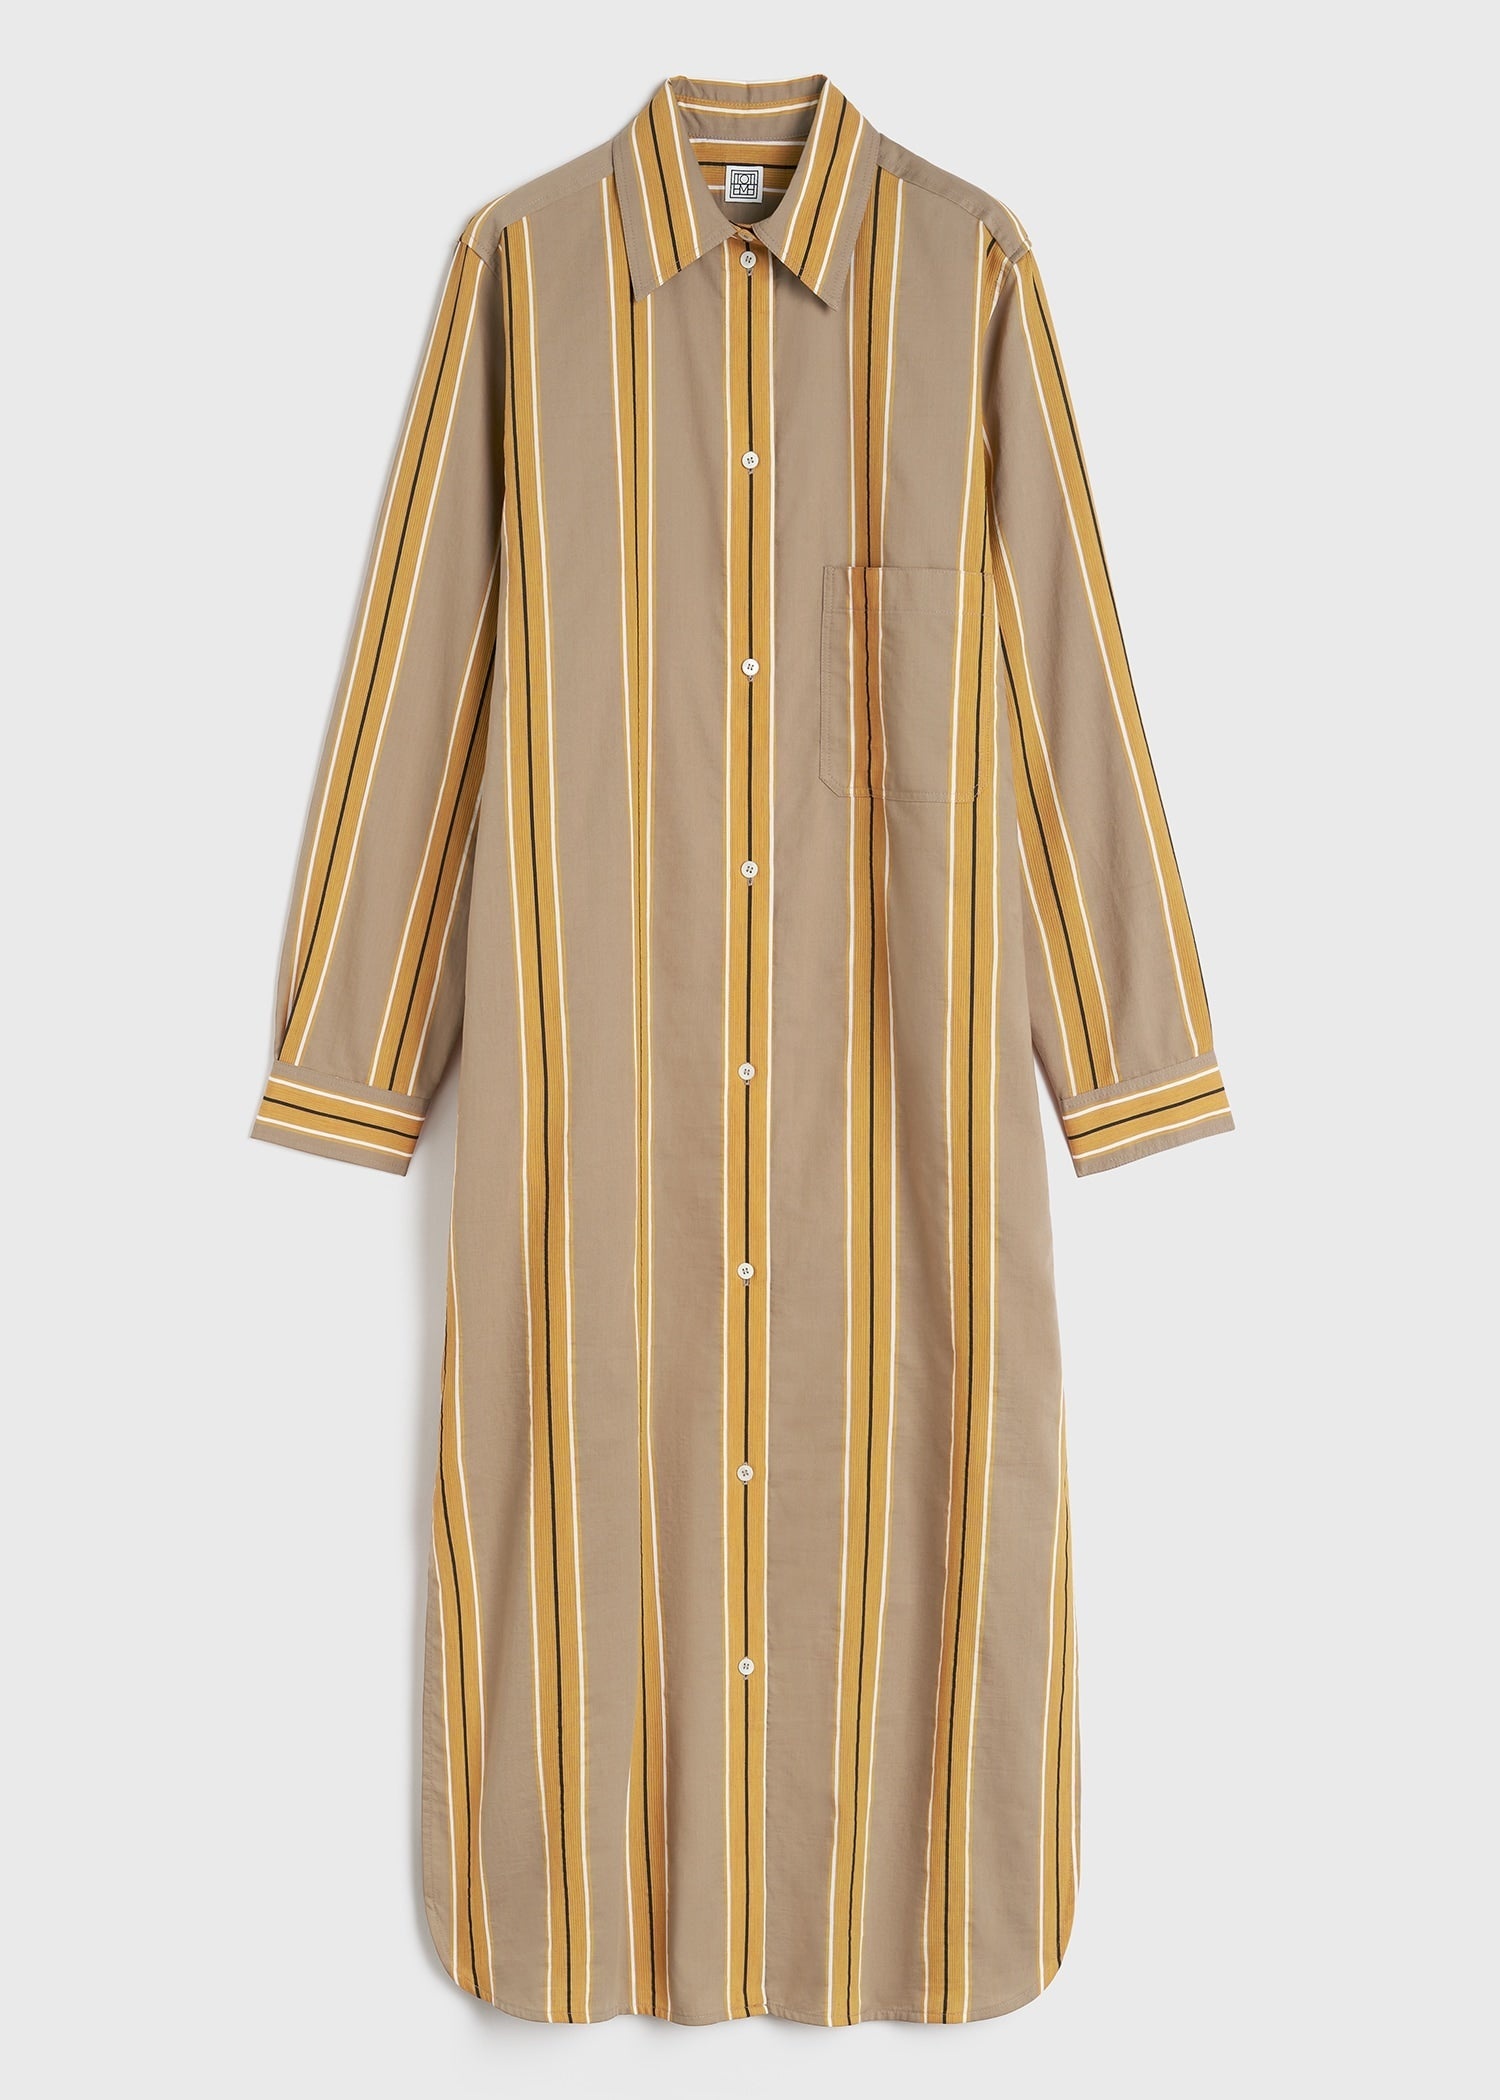 Jacquard-striped tunic dress caramel/cornsilk - 1